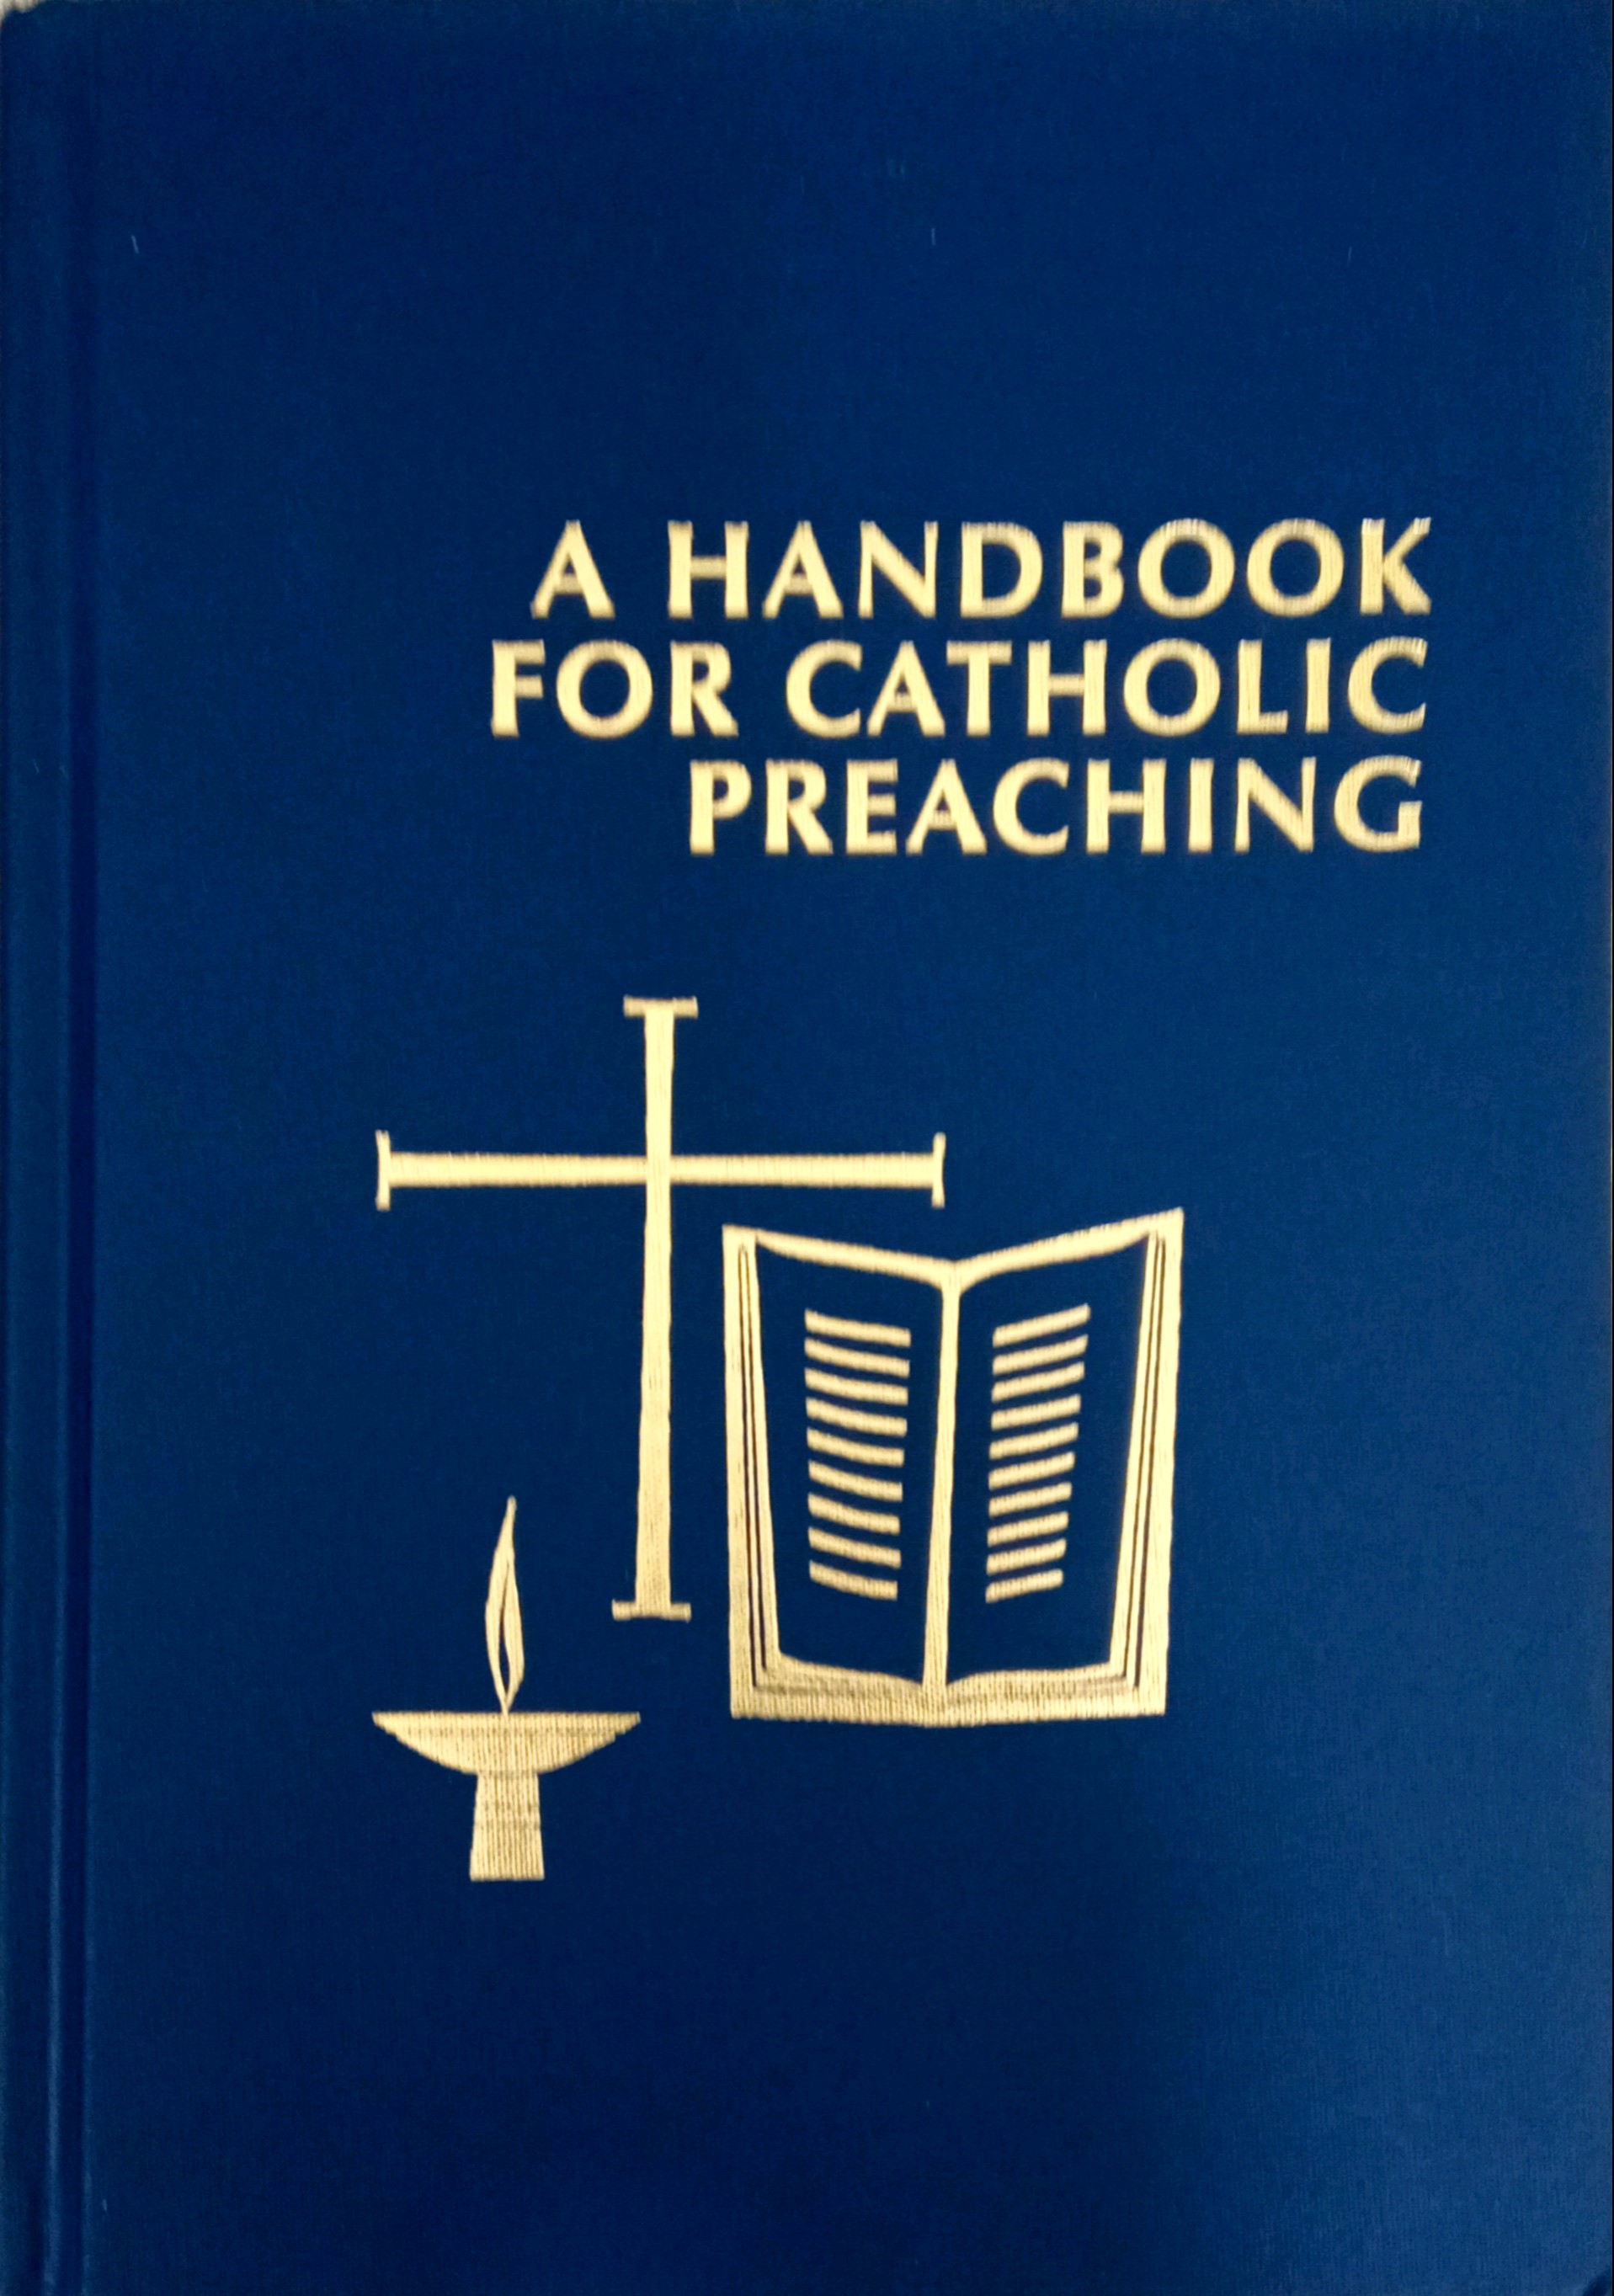 A HANDBOOK FOR CATHOLIC PREACHING